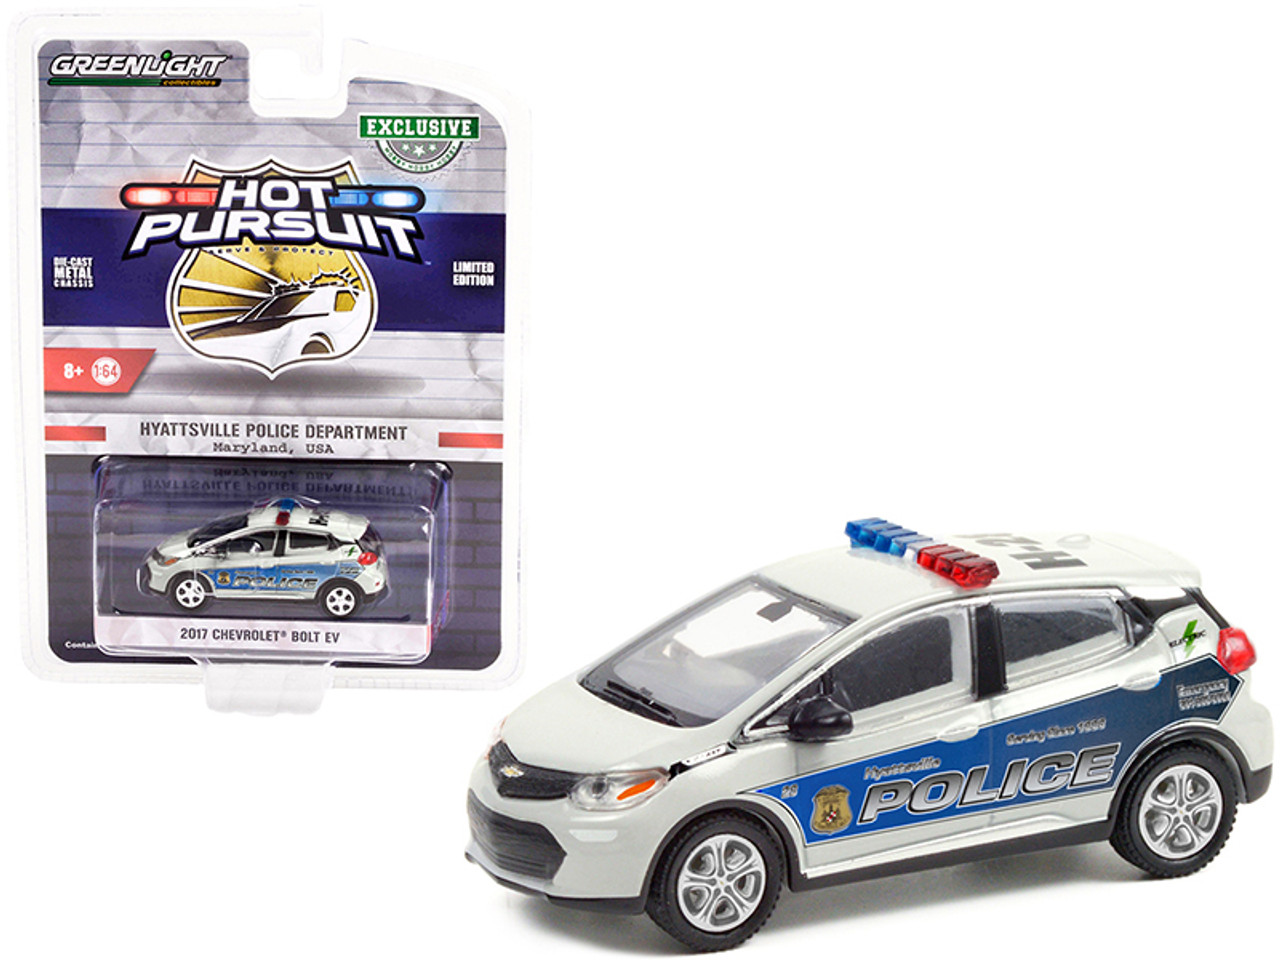 2017 Chevrolet Bolt EV Gray "Hyattsville Police Department" Maryland (USA) "Hot Pursuit" Series 1/64 Diecast Model Car by Greenlight